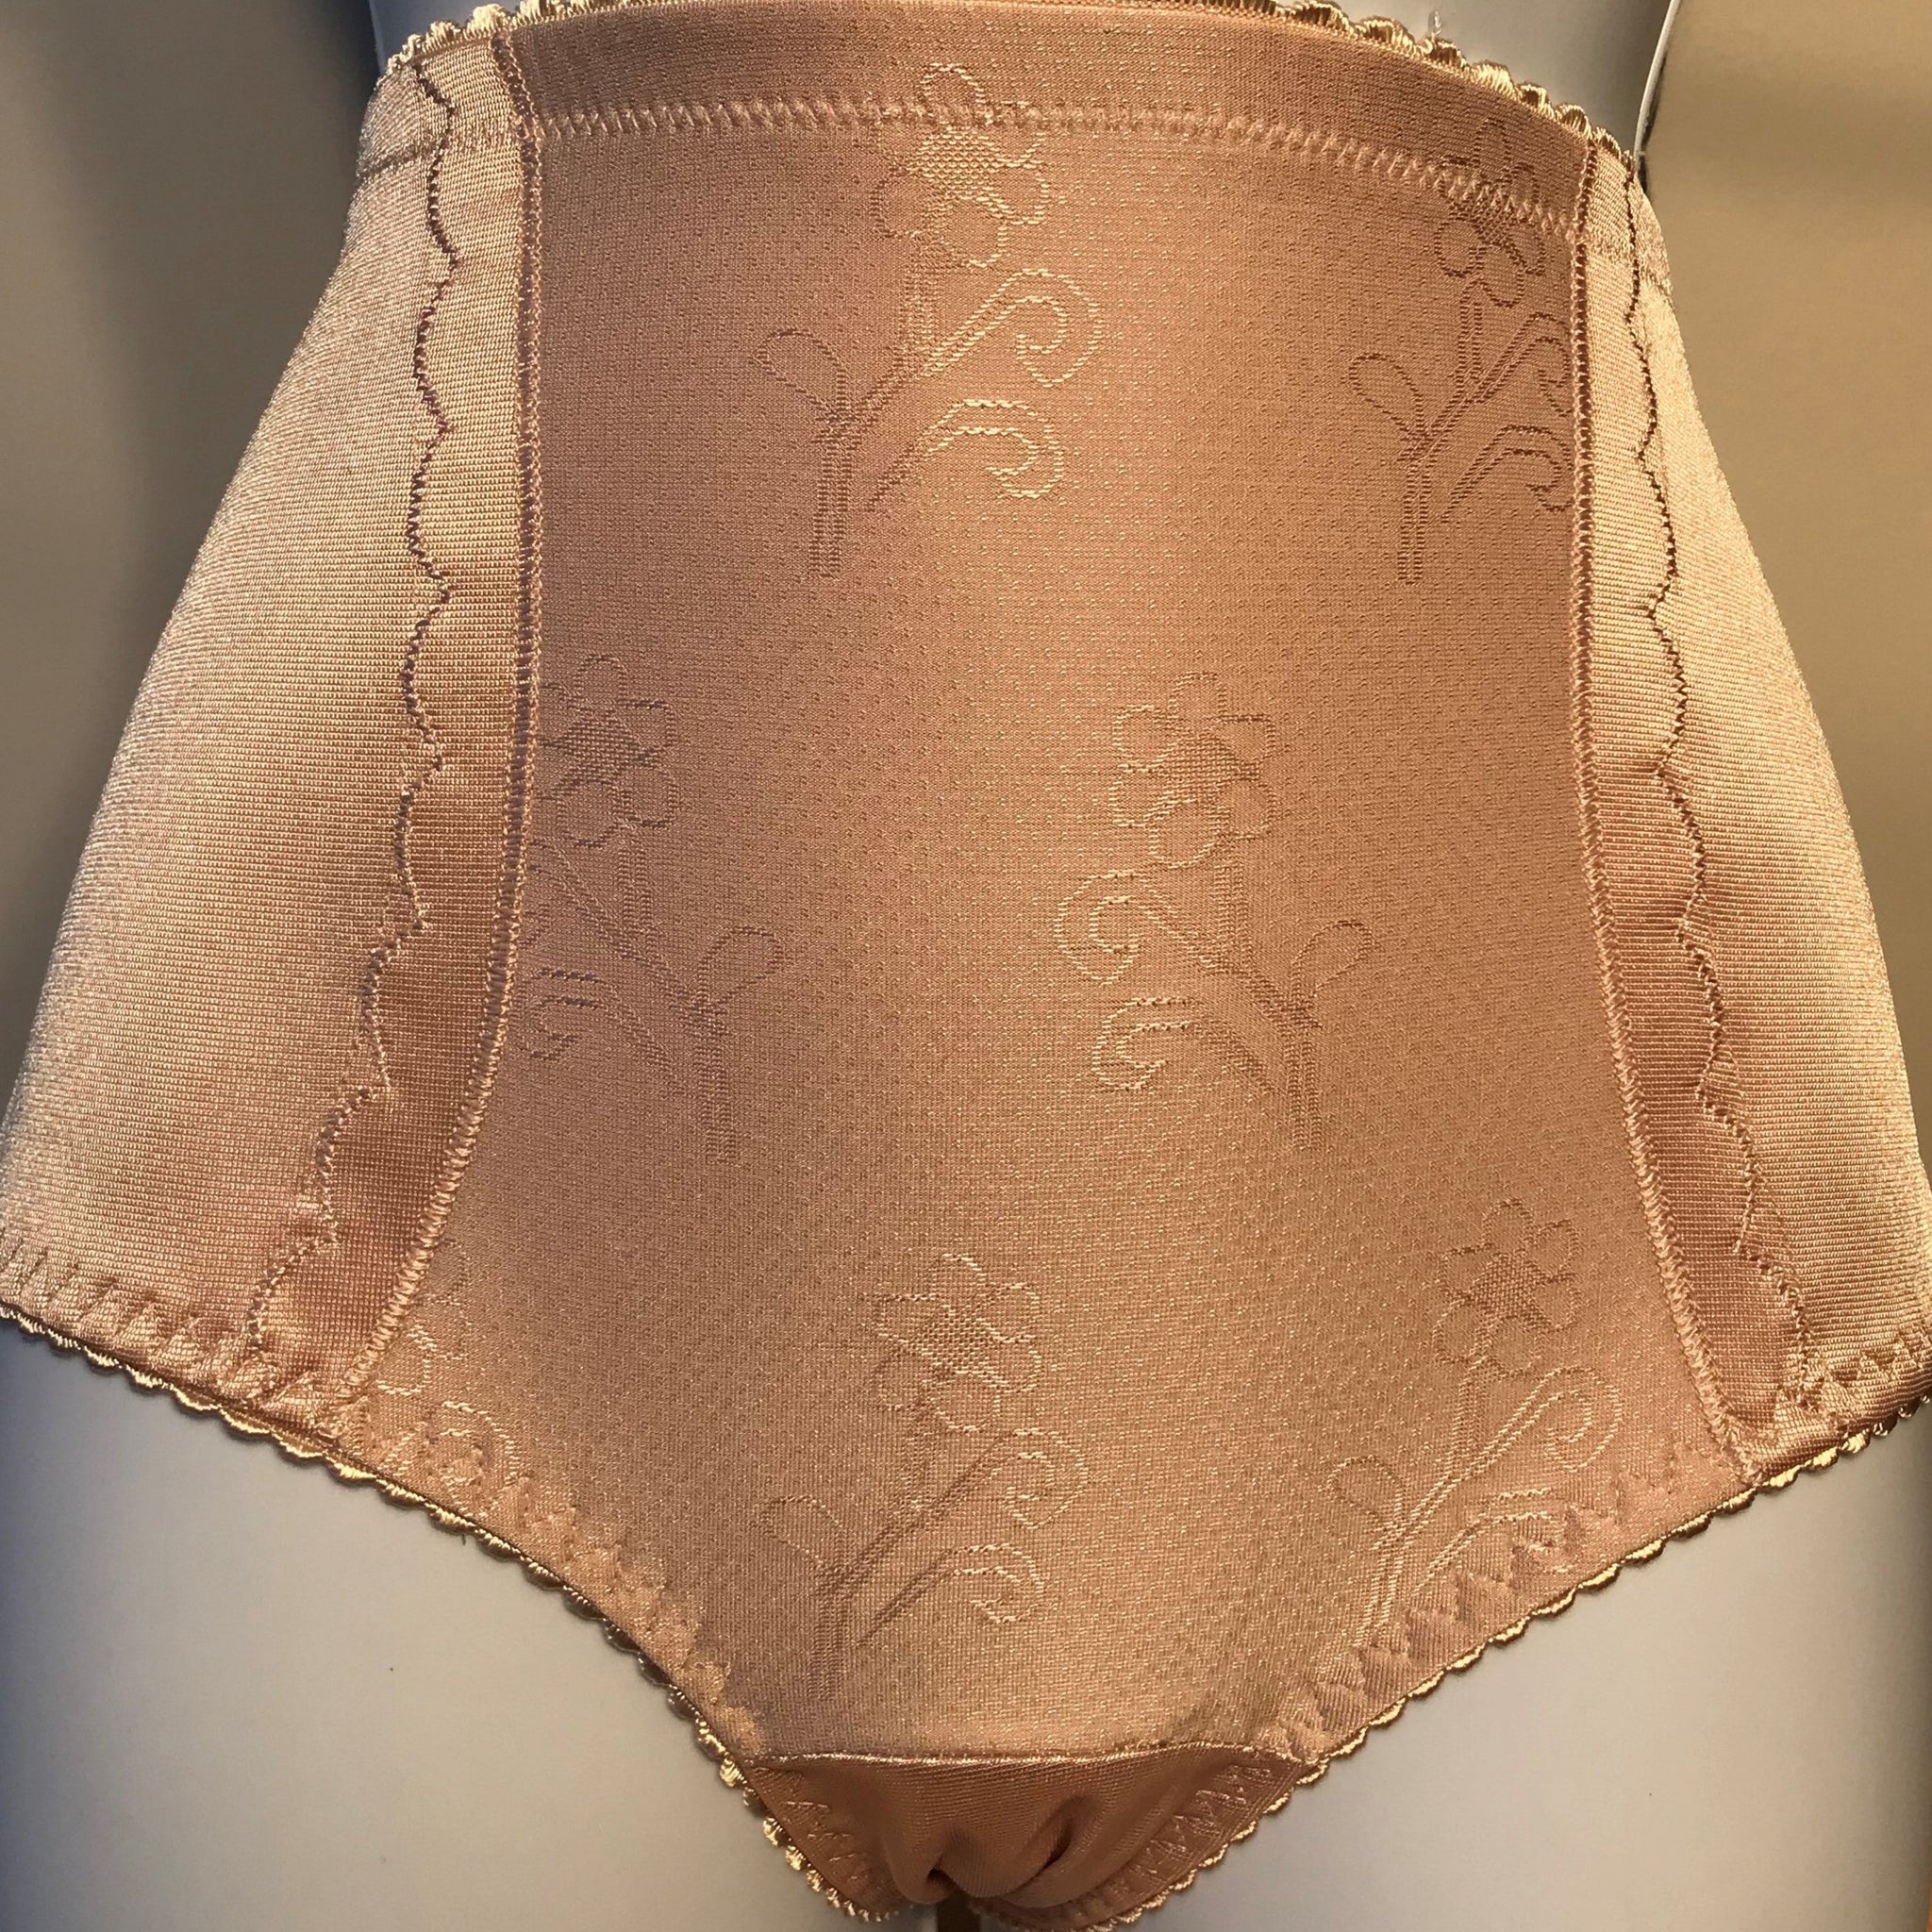 L'ORGUEILLEUSE - Light support panties – Boutique Intimoda